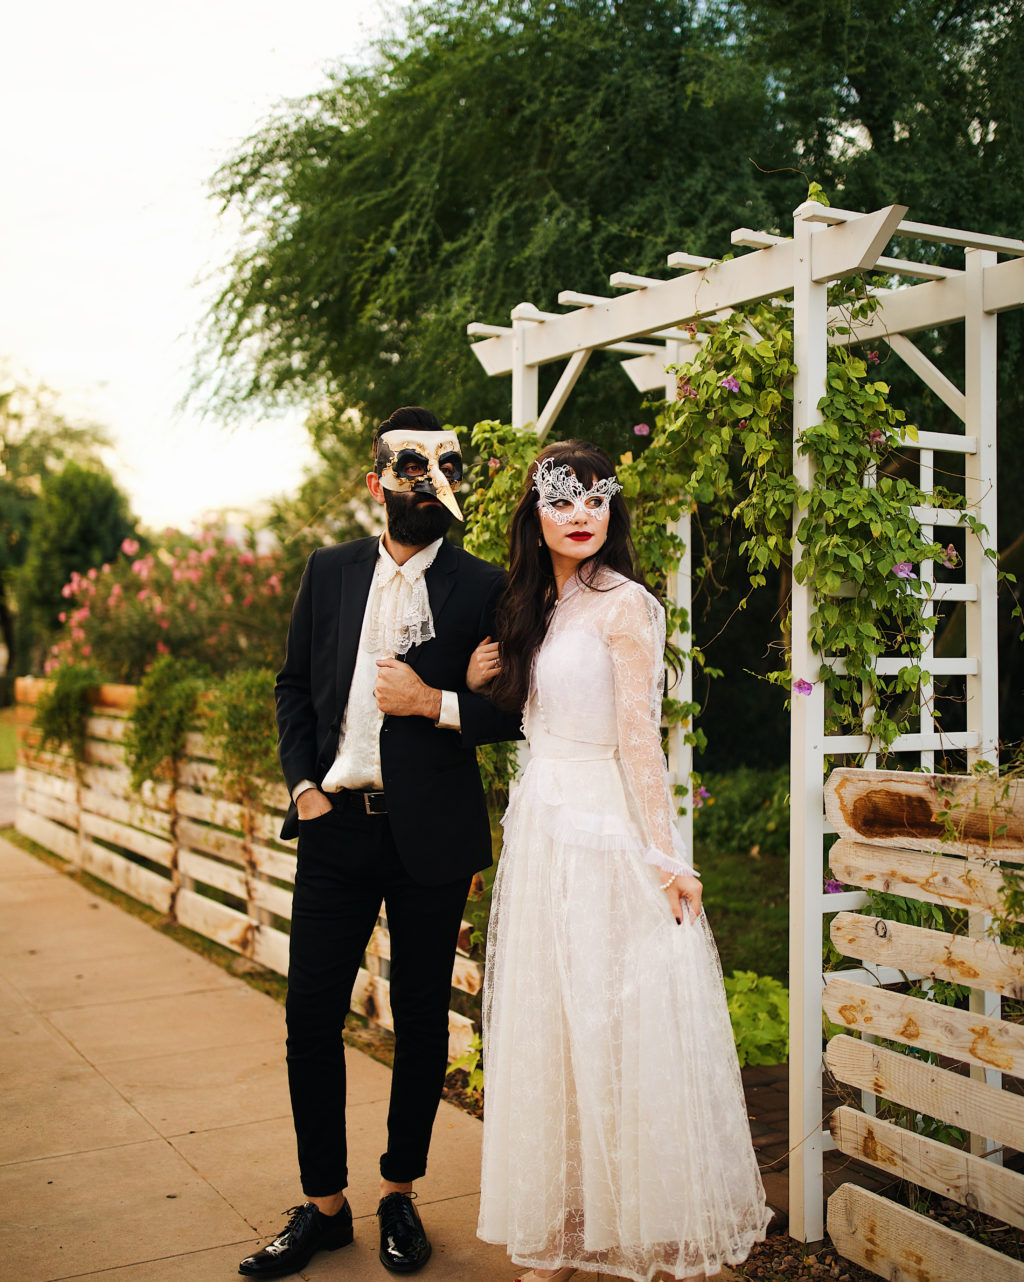 Couples Costumes Masquerade